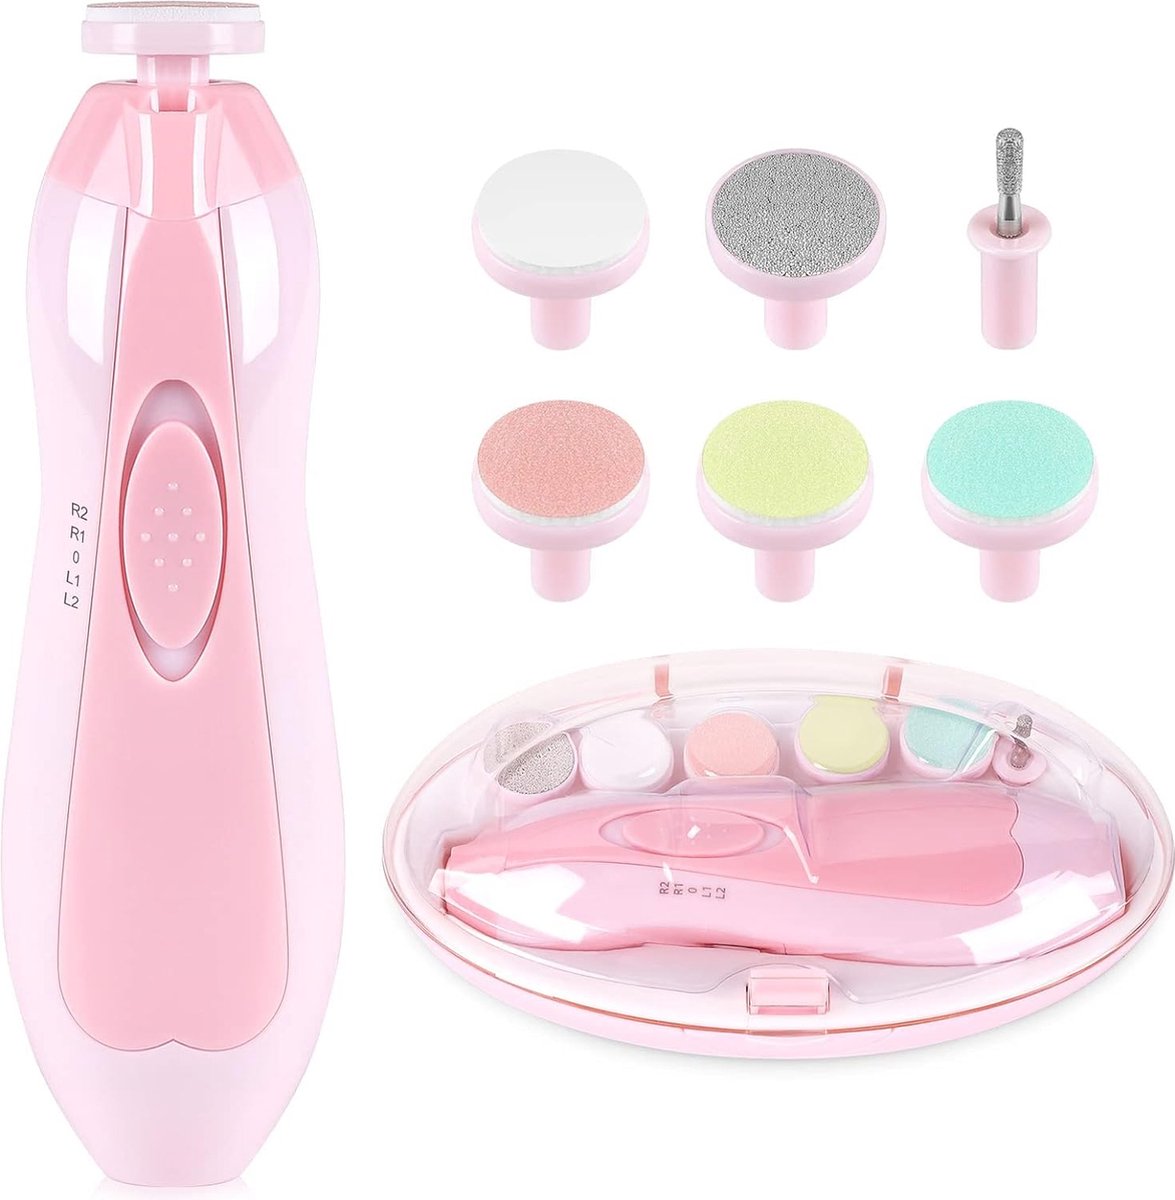 Baby Nagelvijl - Elektrische Nagelvijl - Baby Nagelverzorging - Baby Nagelknipper - Ook Voor Volwassenen - LED Licht - Baby Cadeau - Roze